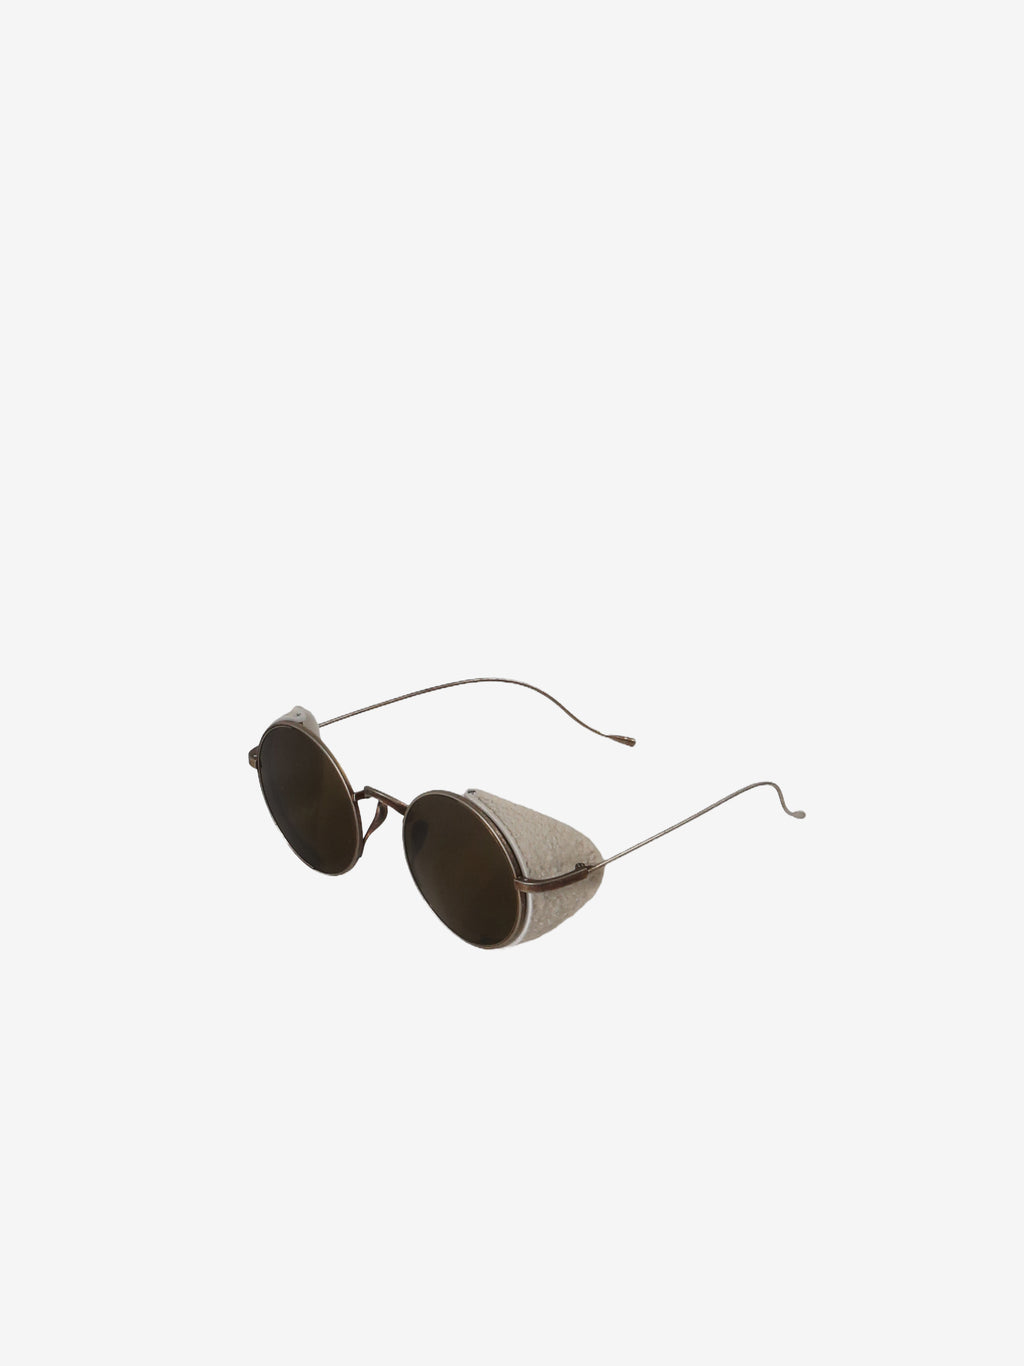 RIGARDS X UMA WANG Stainless Steel Sunglasses Vintage Gold/Bronze Lens/Matte